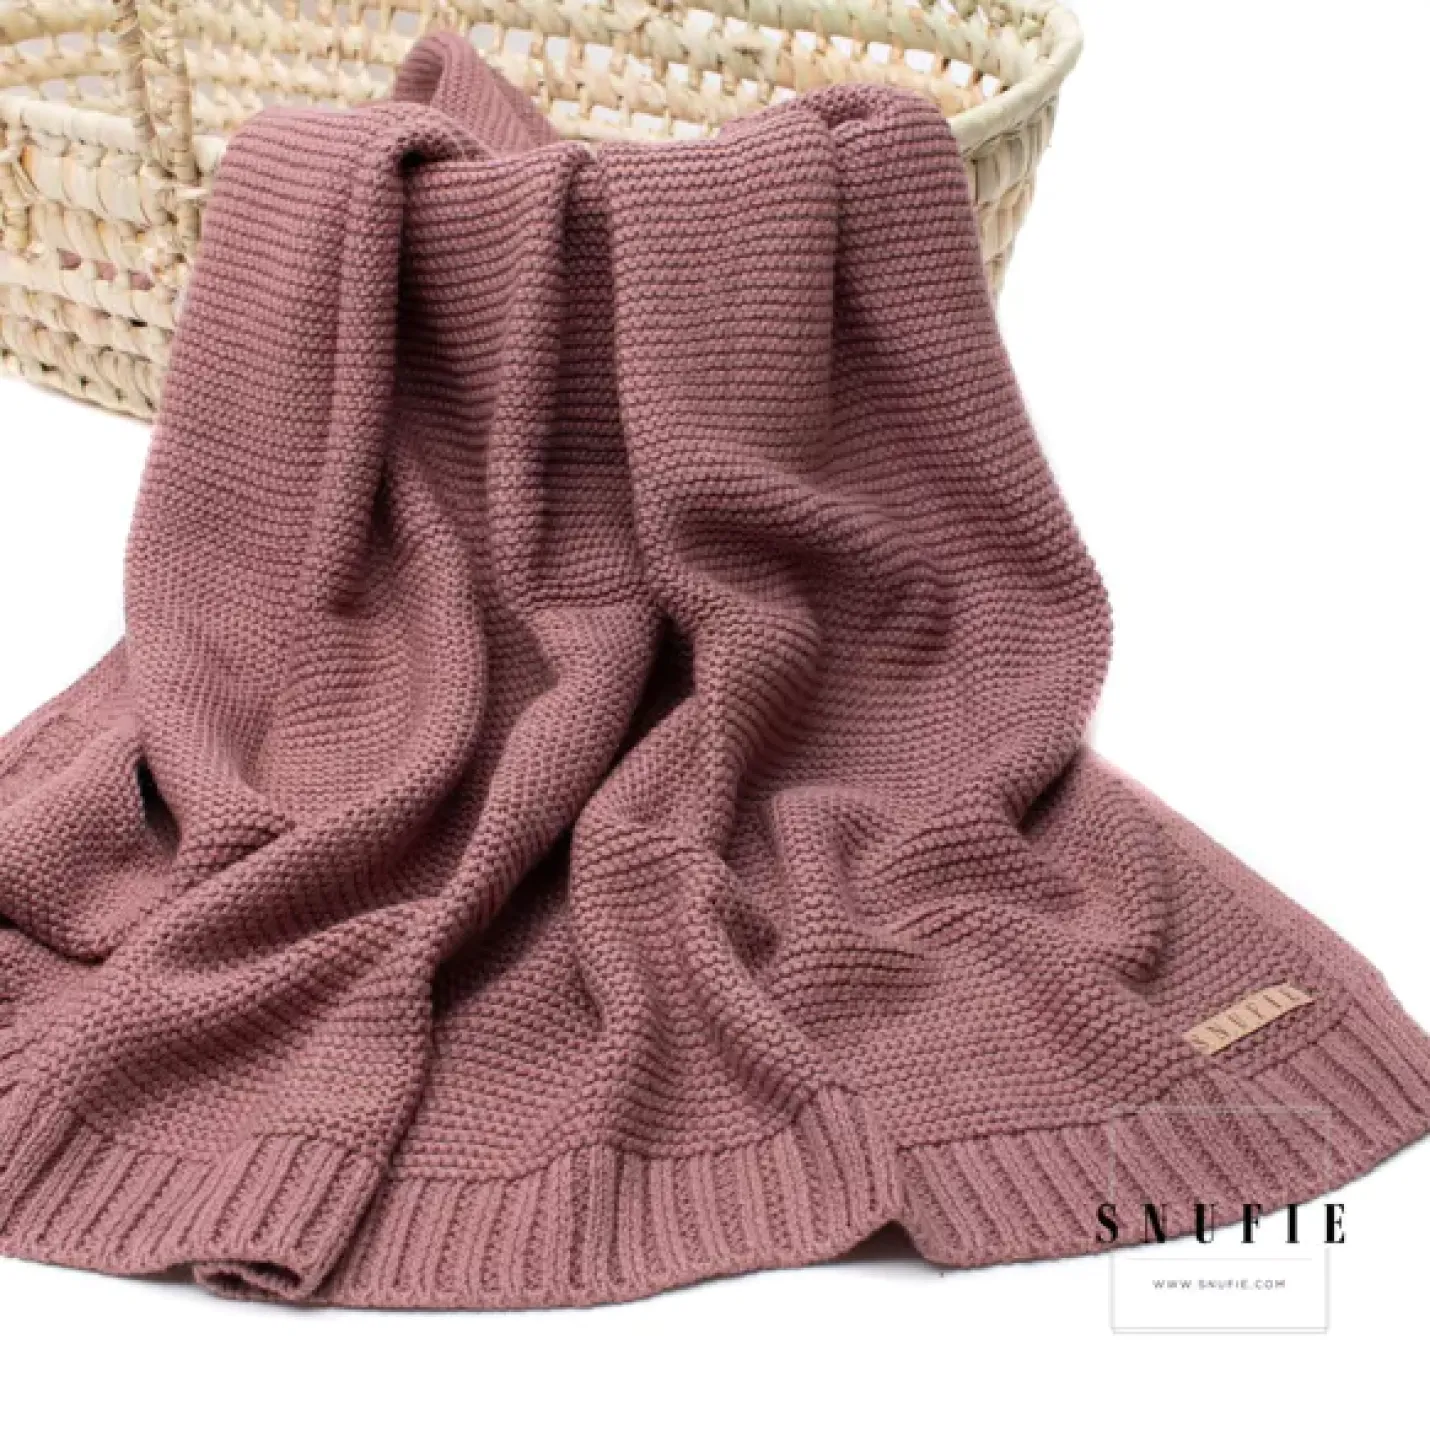 Snufie-Baby-blanket-knitted-LightCoffee-NeoNurses